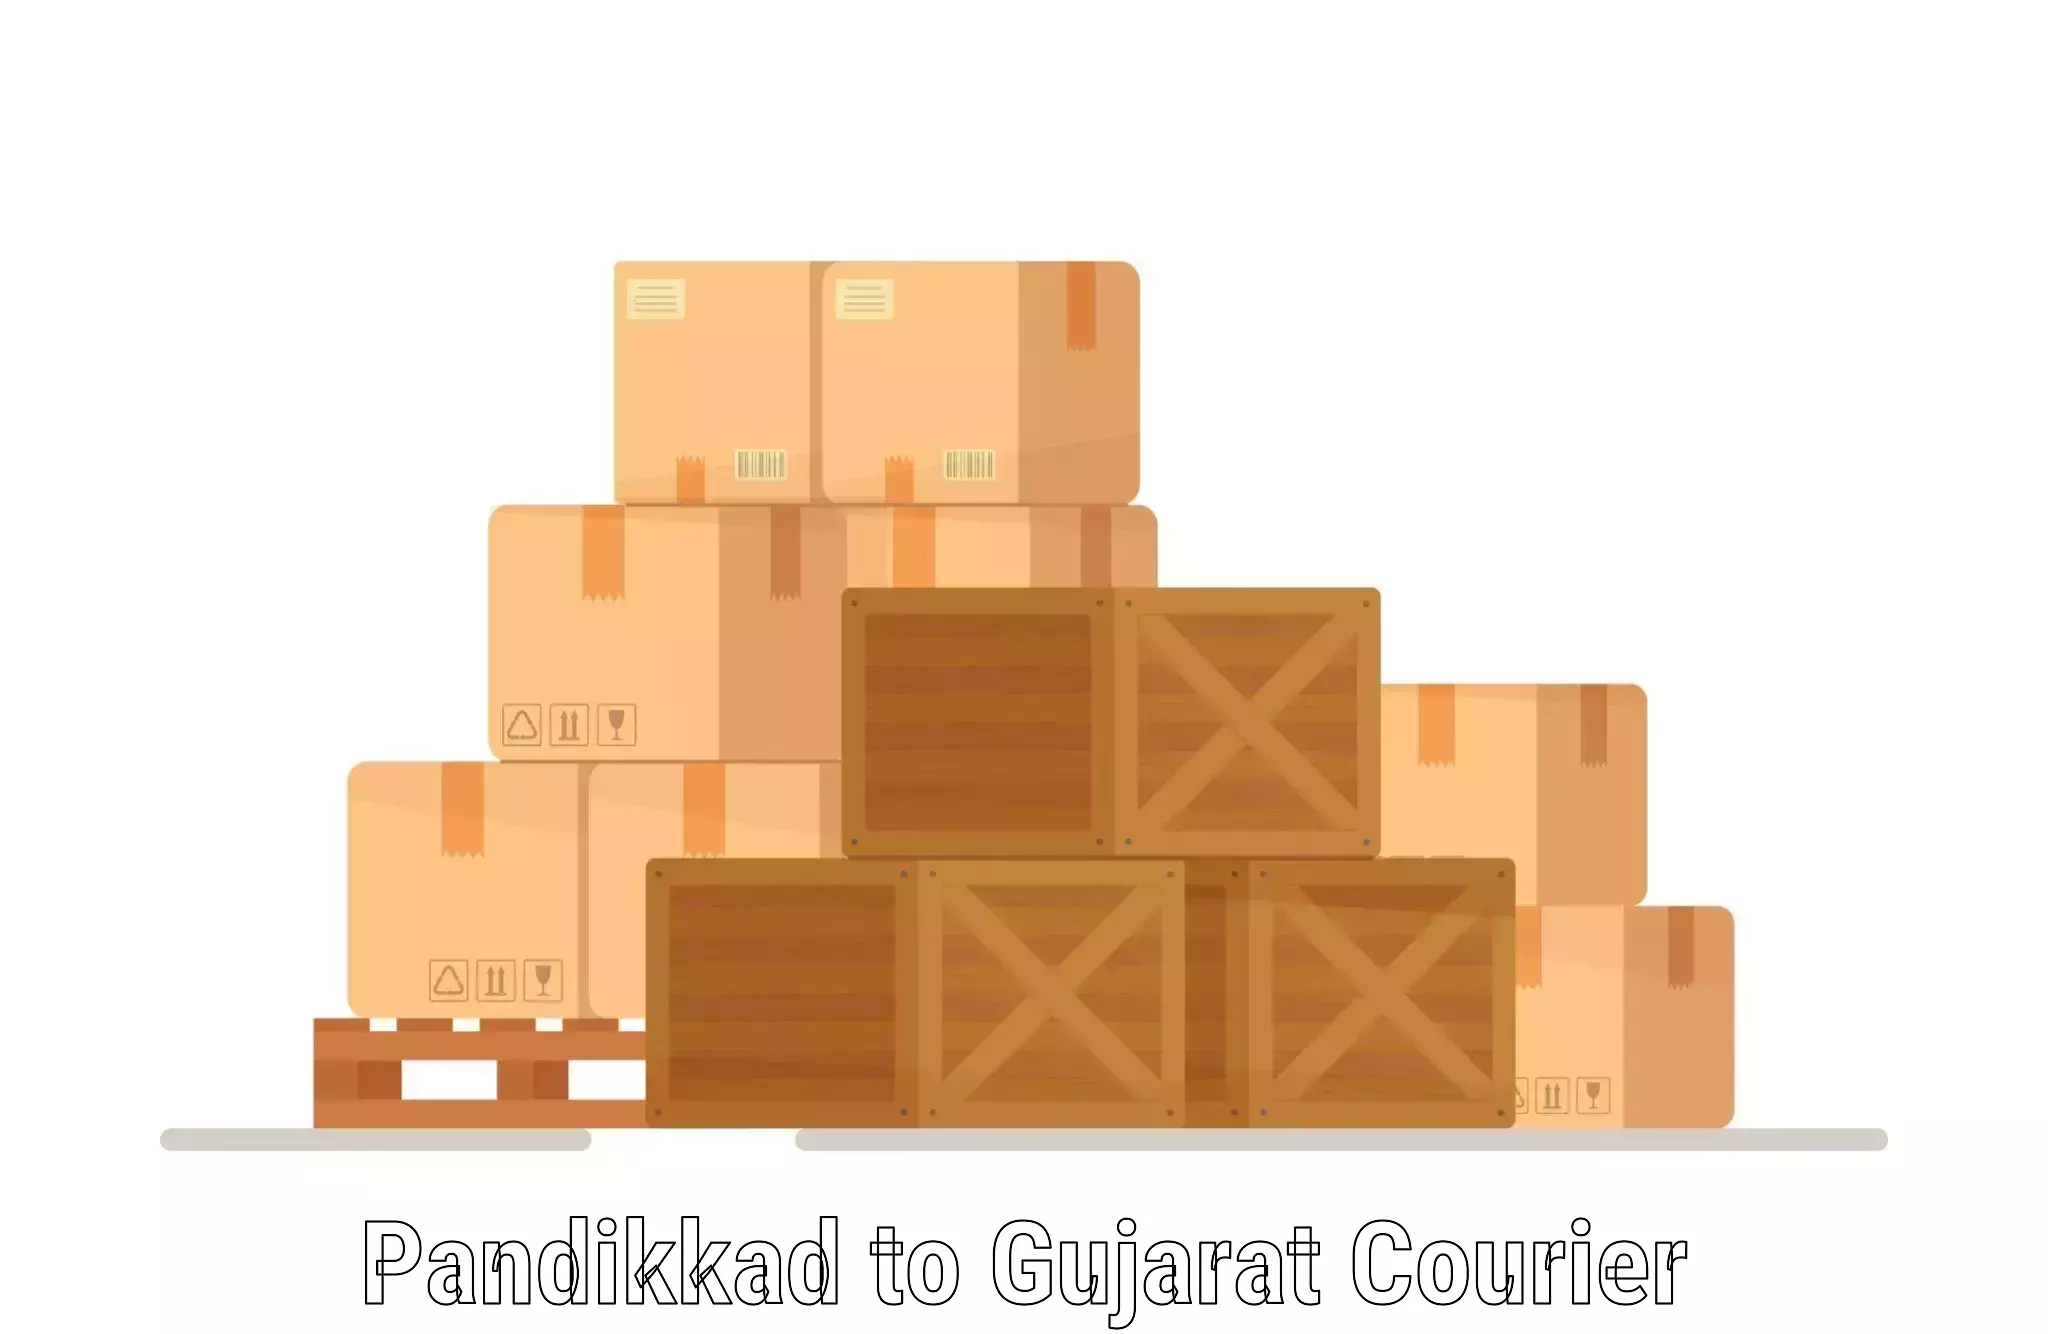 Custom logistics solutions Pandikkad to Bayad